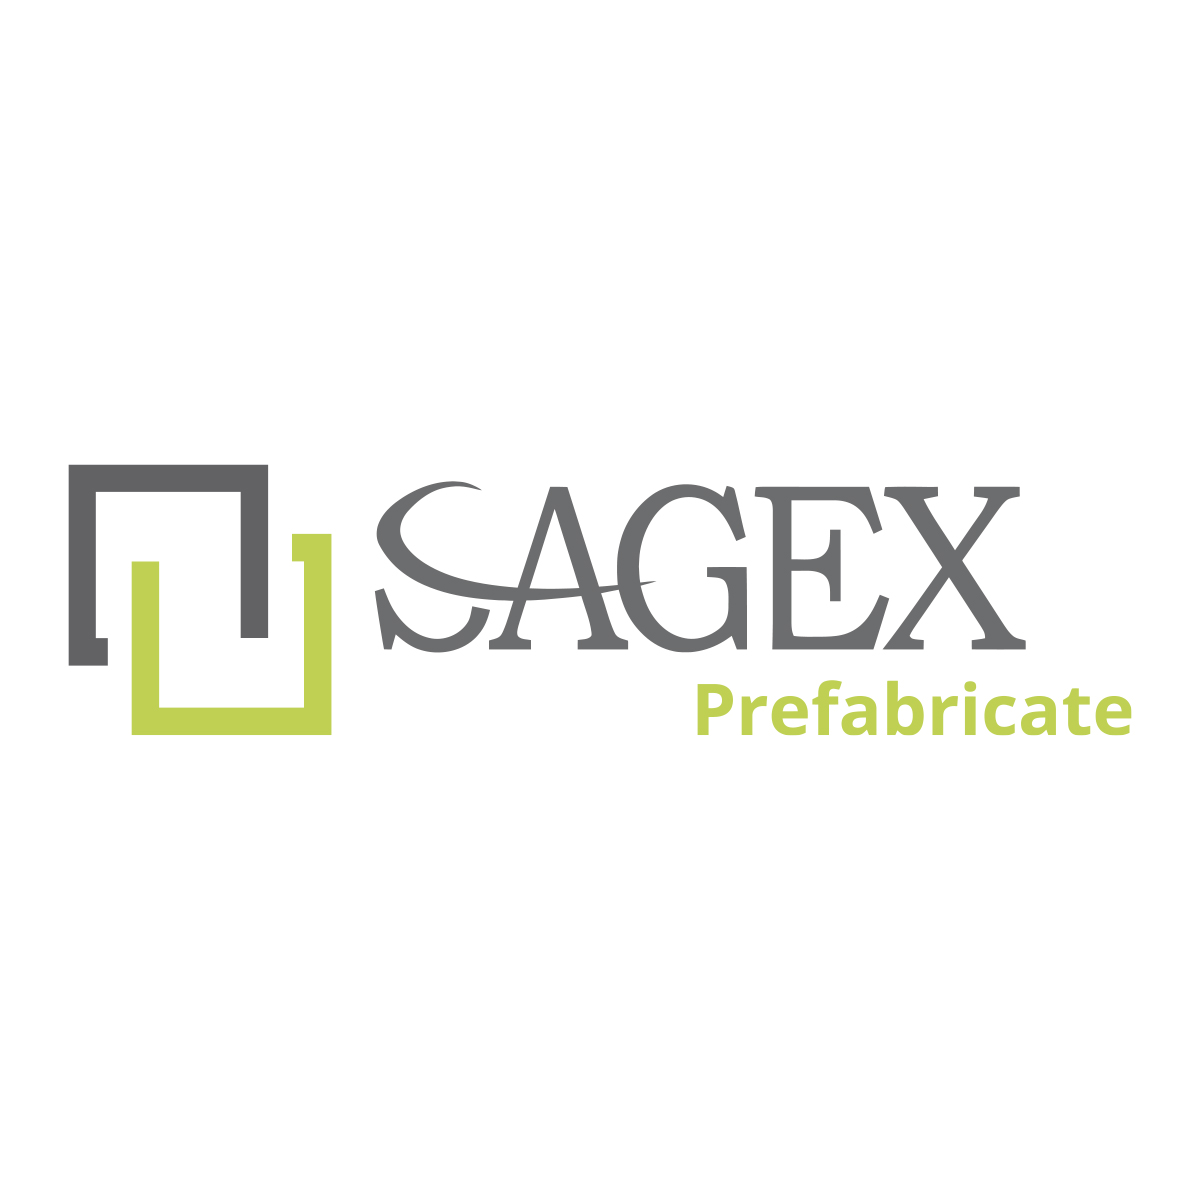 Sagex Prefabricate